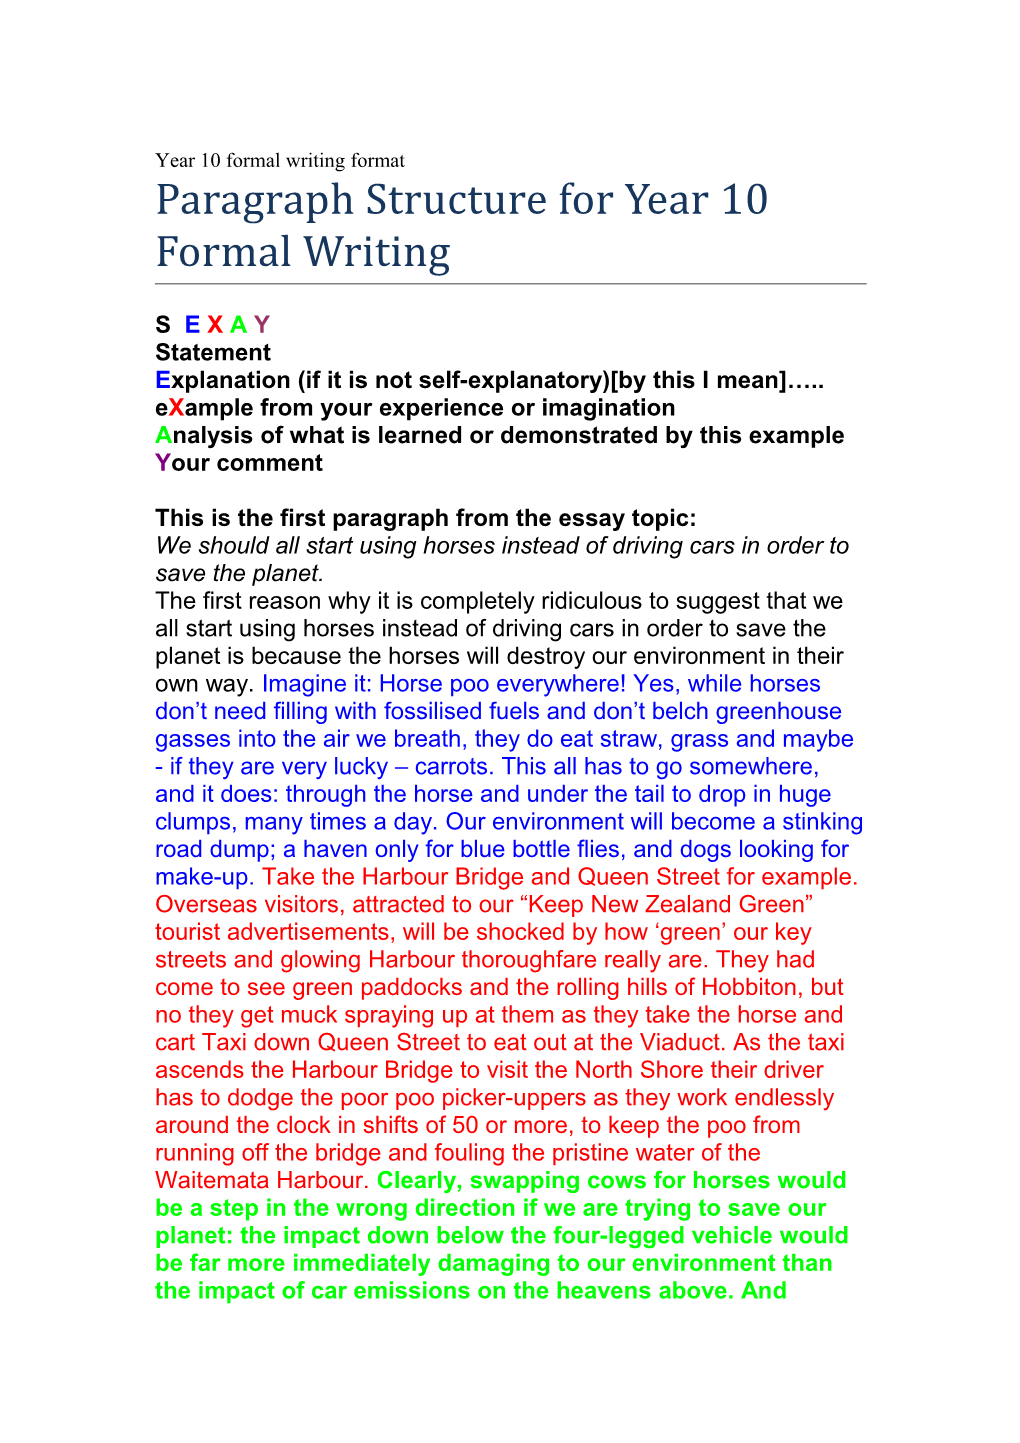 Year 10 Formal Writing Format